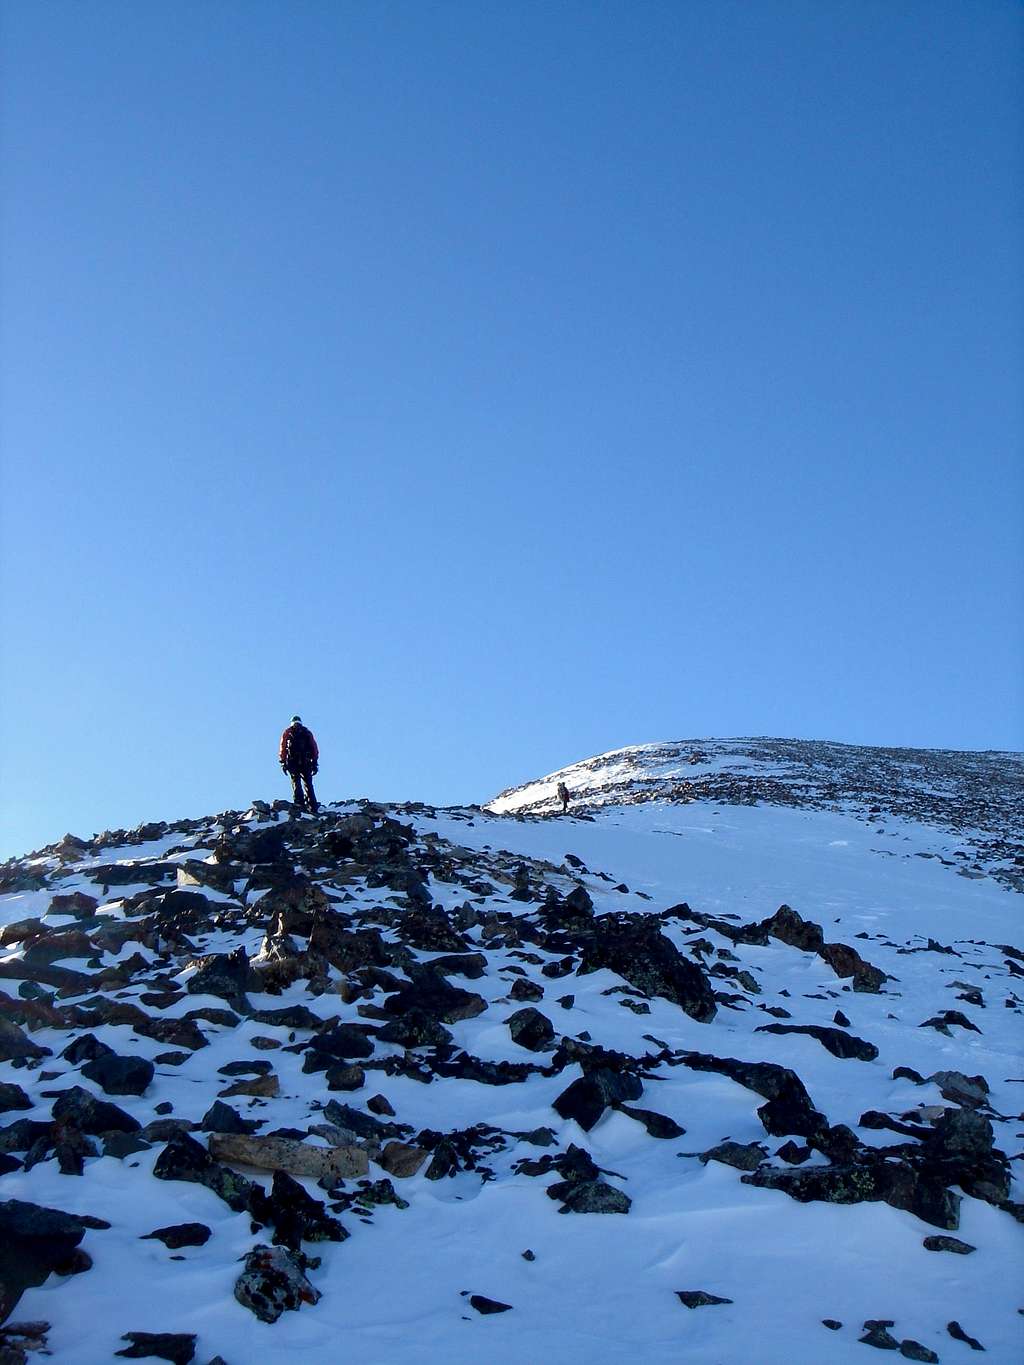 Shadows on upper slopes of Quandary's East Ridge